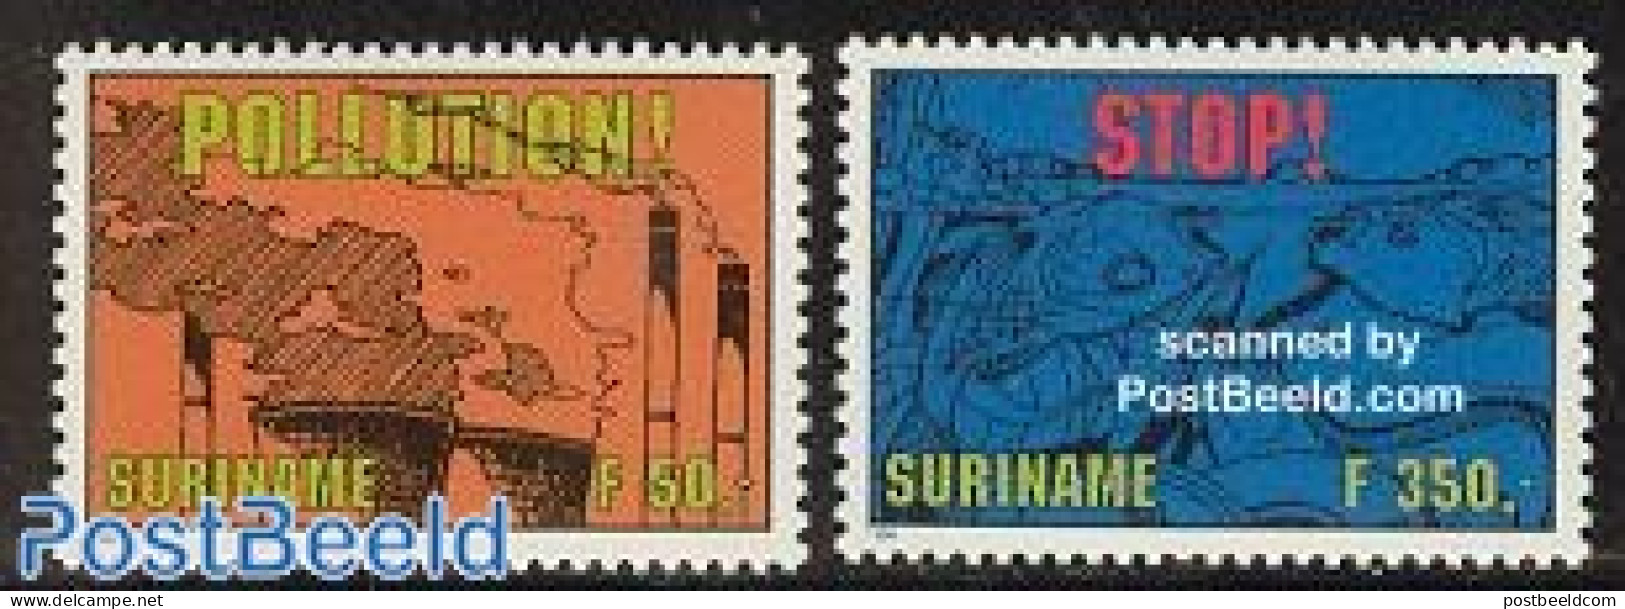 Suriname, Republic 1994 Environment Protection 2v, Mint NH, Nature - Environment - Fish - Umweltschutz Und Klima